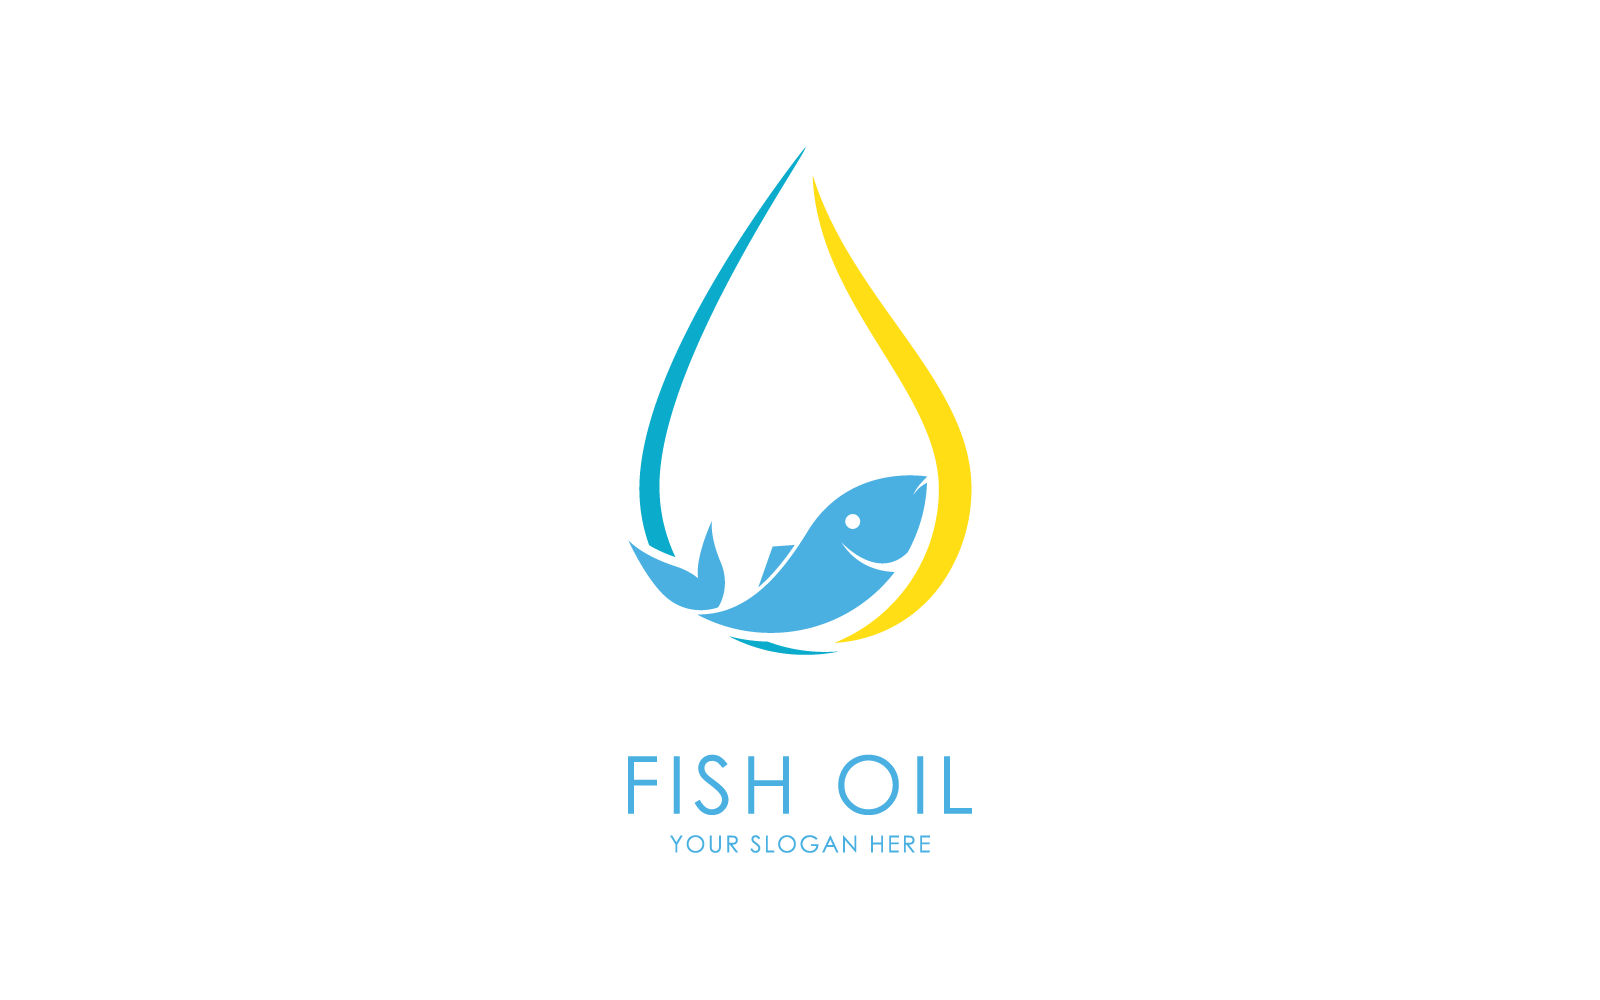 Fish oil logo illustration design template